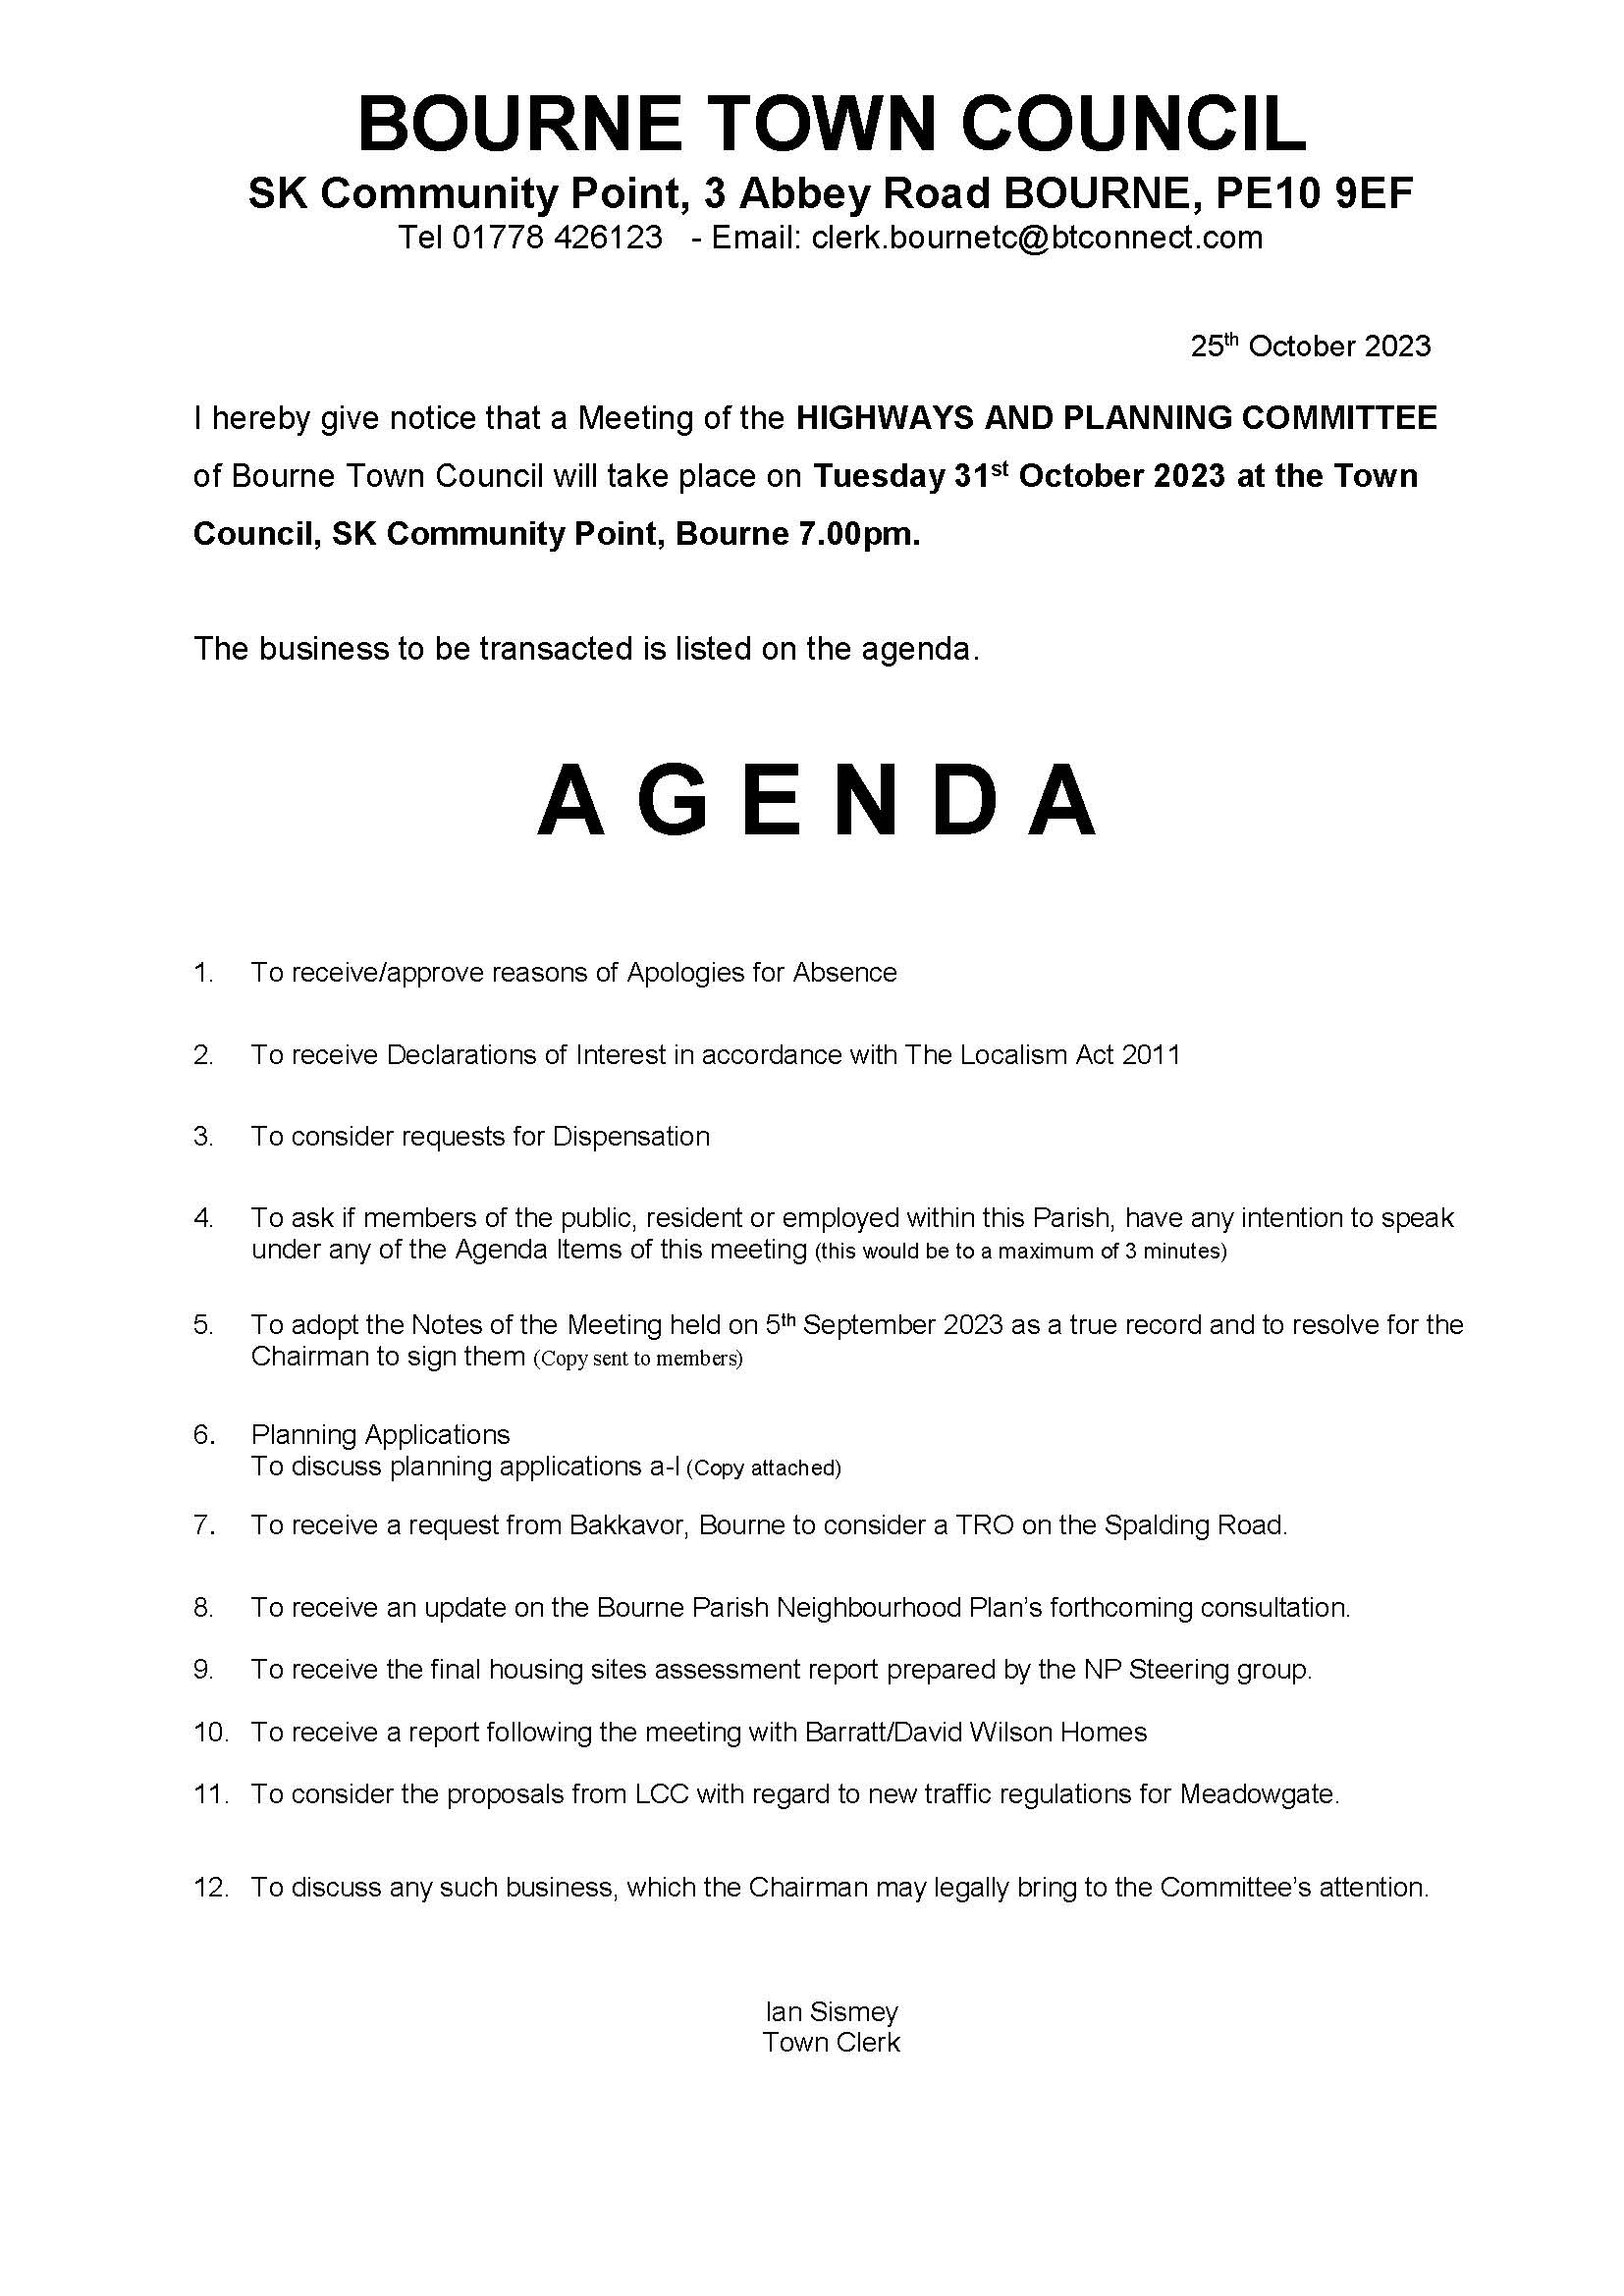 Notice and Agenda - Highways & Planning Meeting 31/10/2023